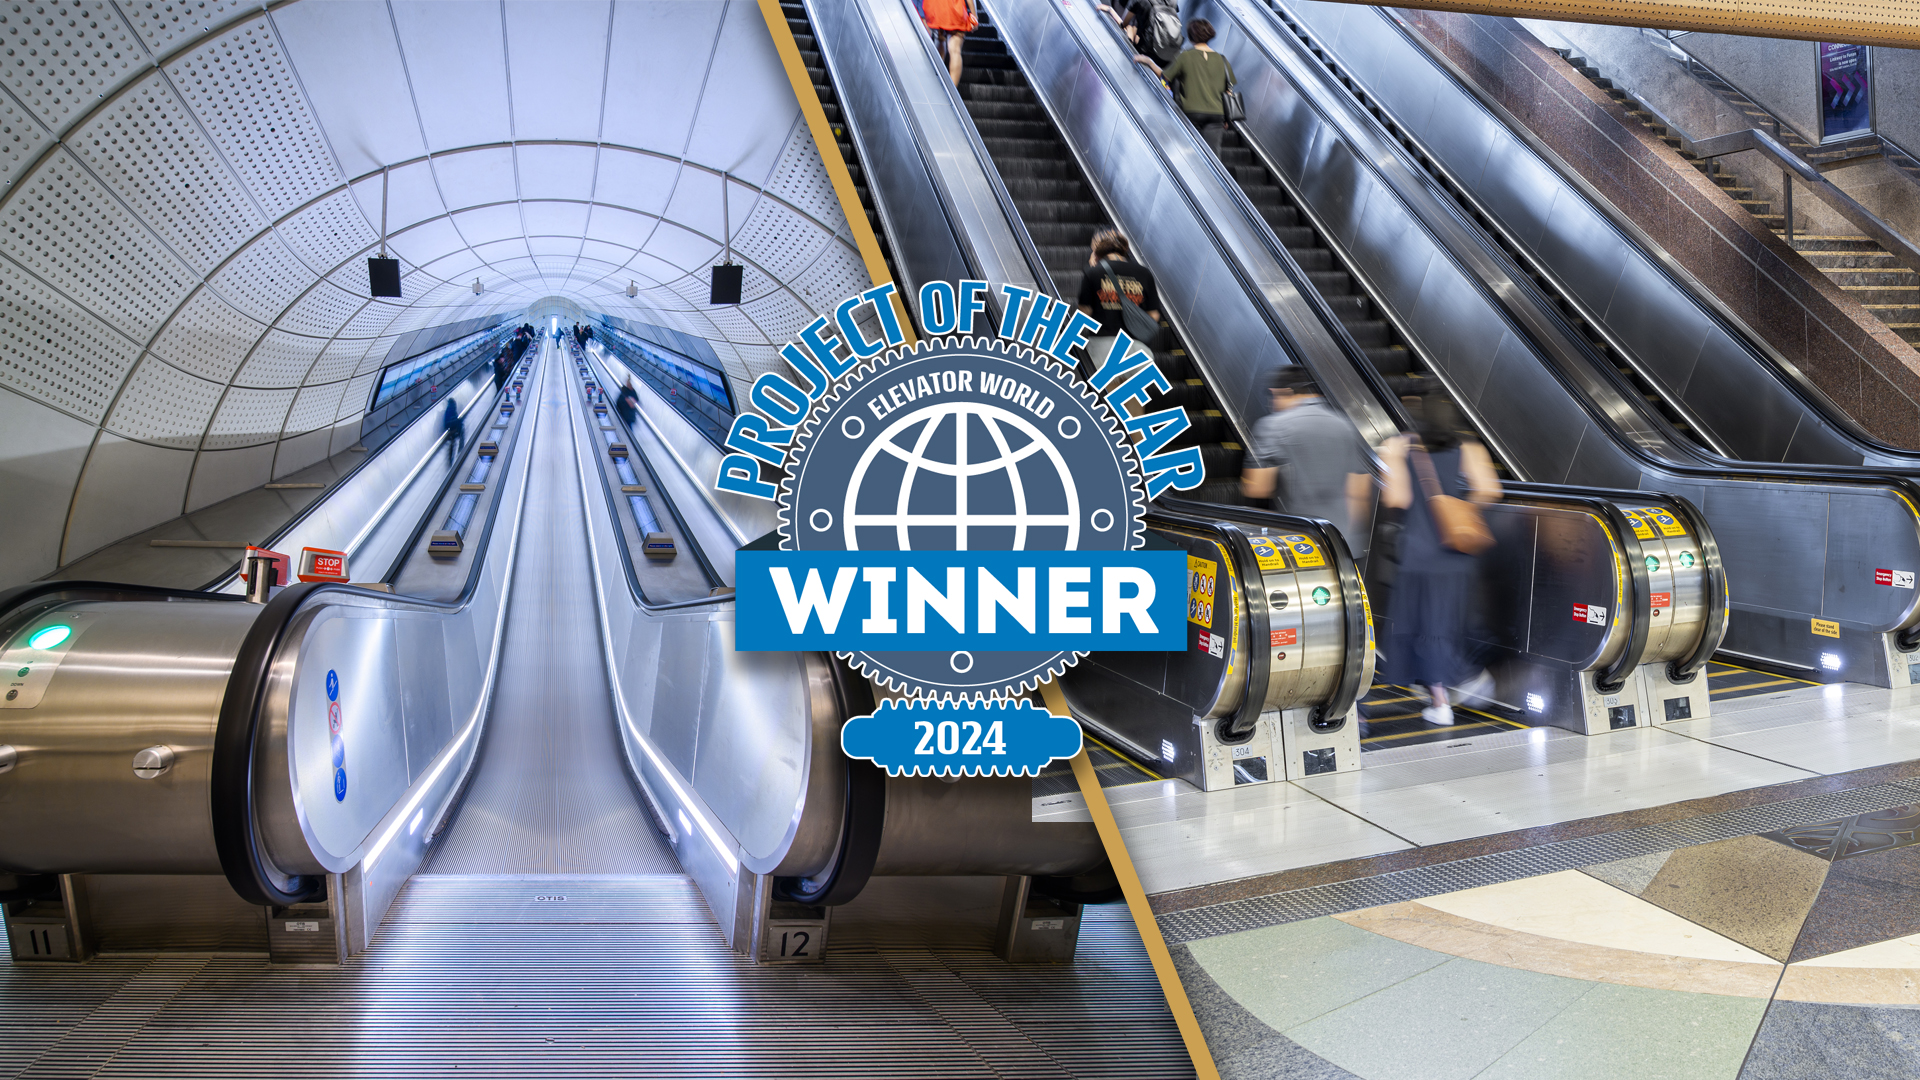 2 Otis escalators with Project of the year winner 2024 logo 